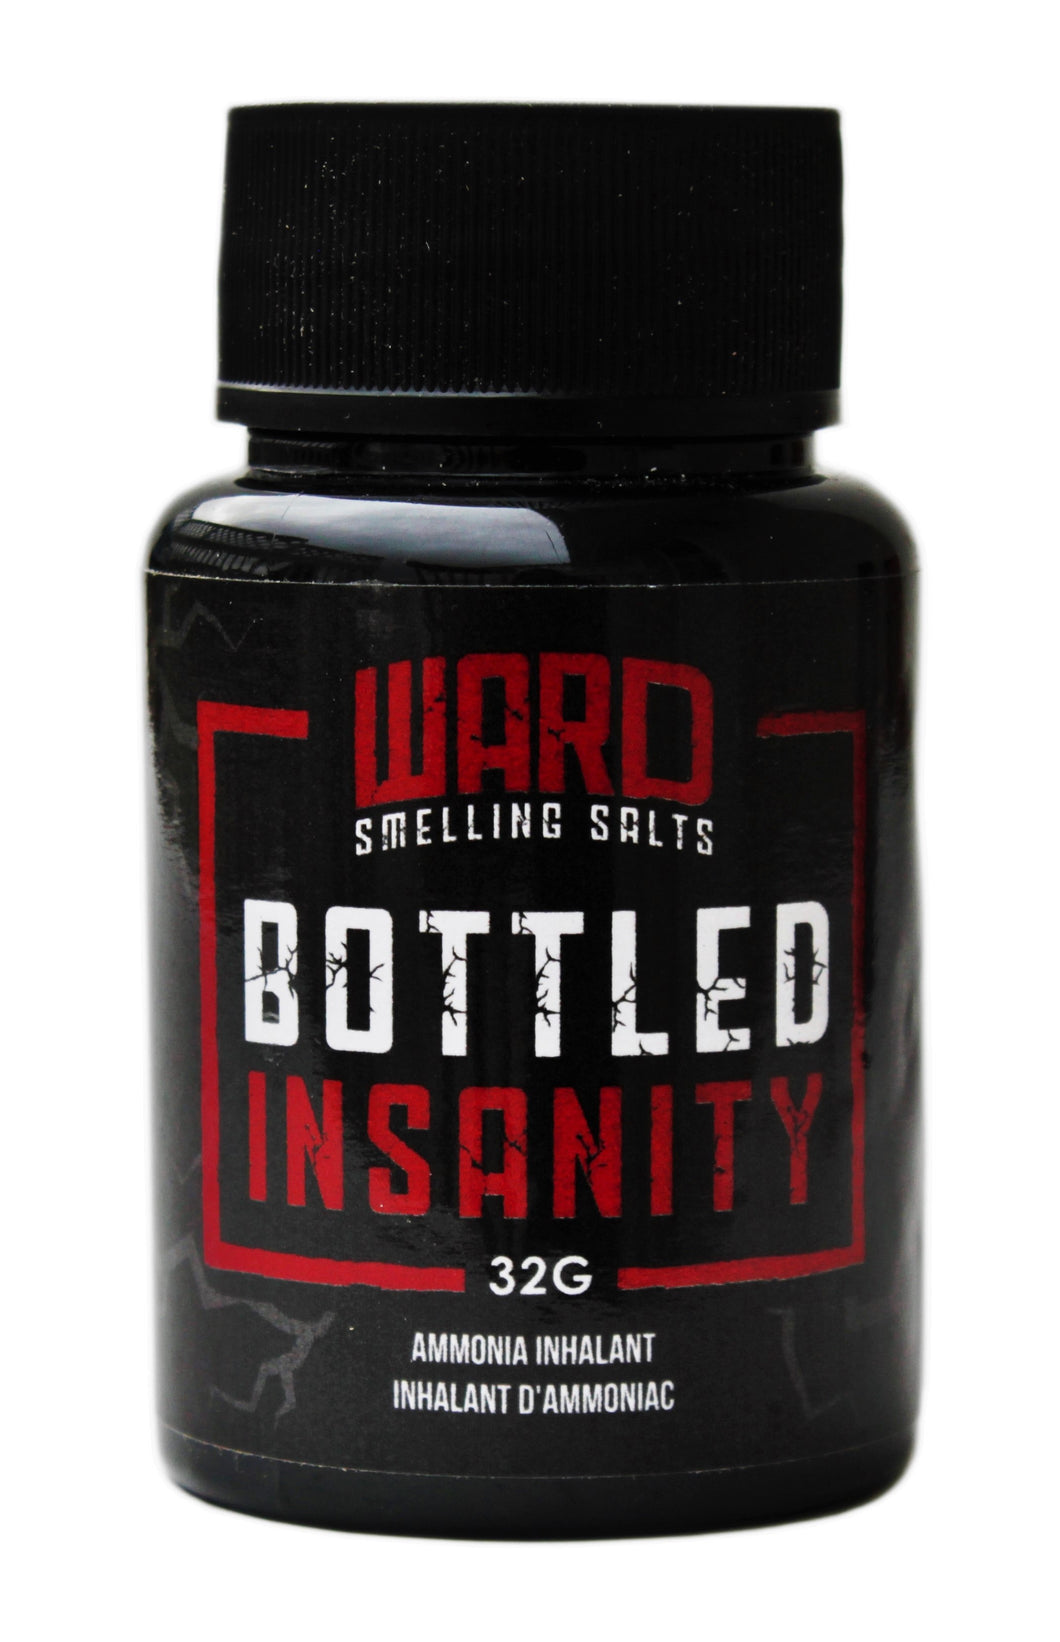 Bottled Insanity Ammonia